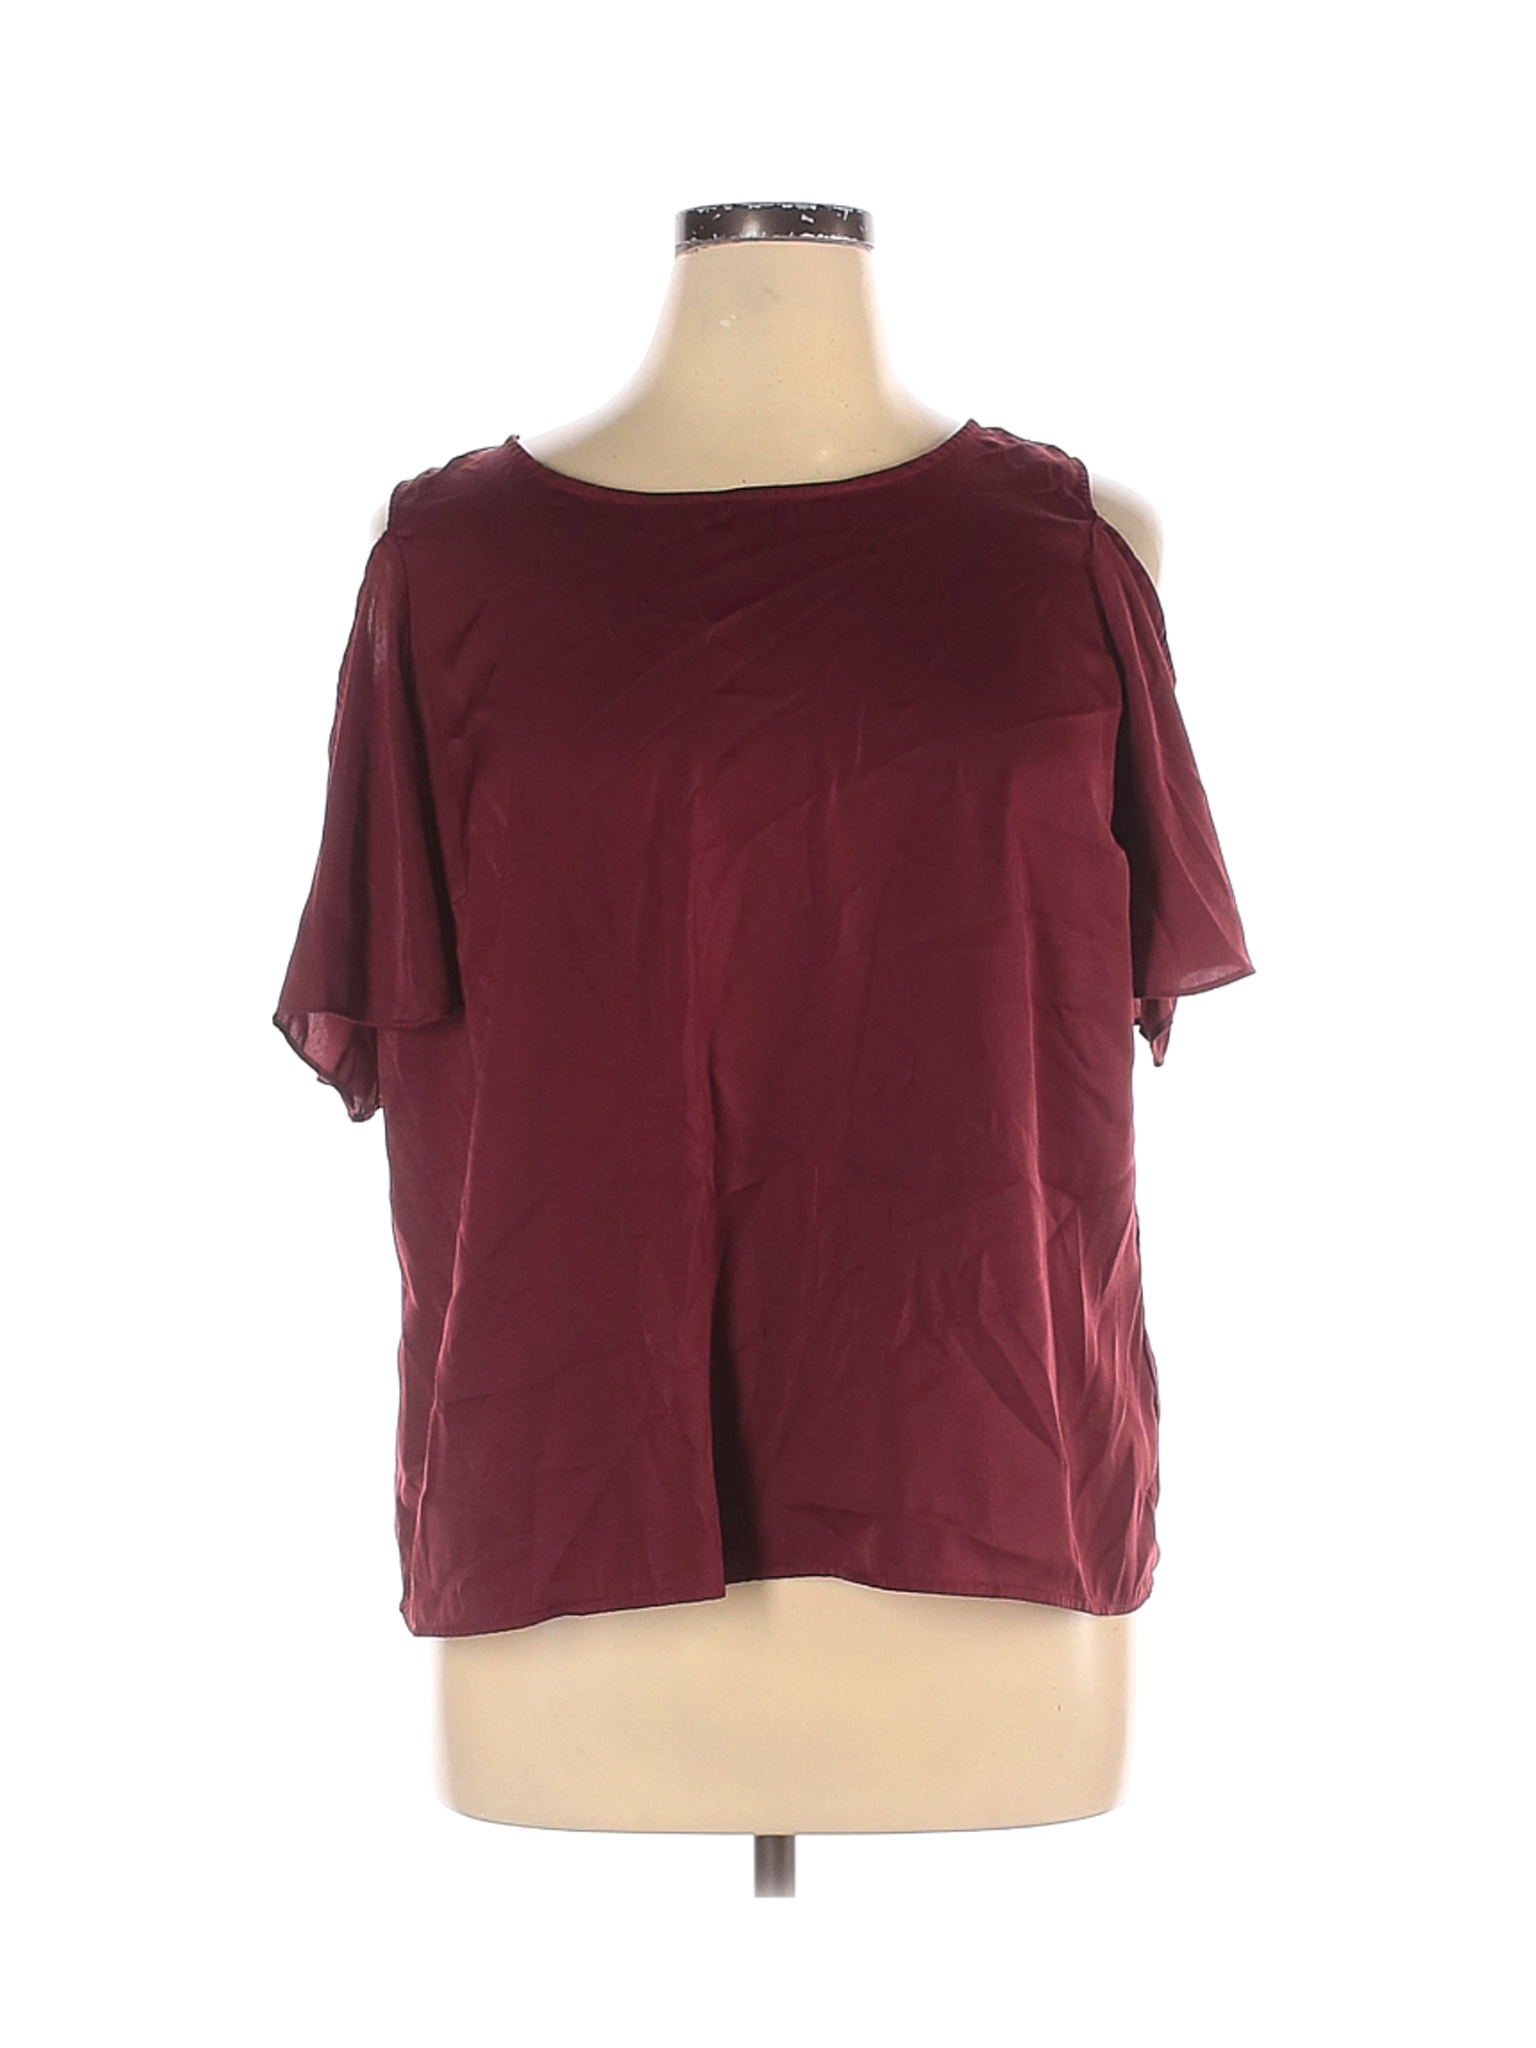 ELOQUII Women Red Short Sleeve Blouse 16 Plus | eBay